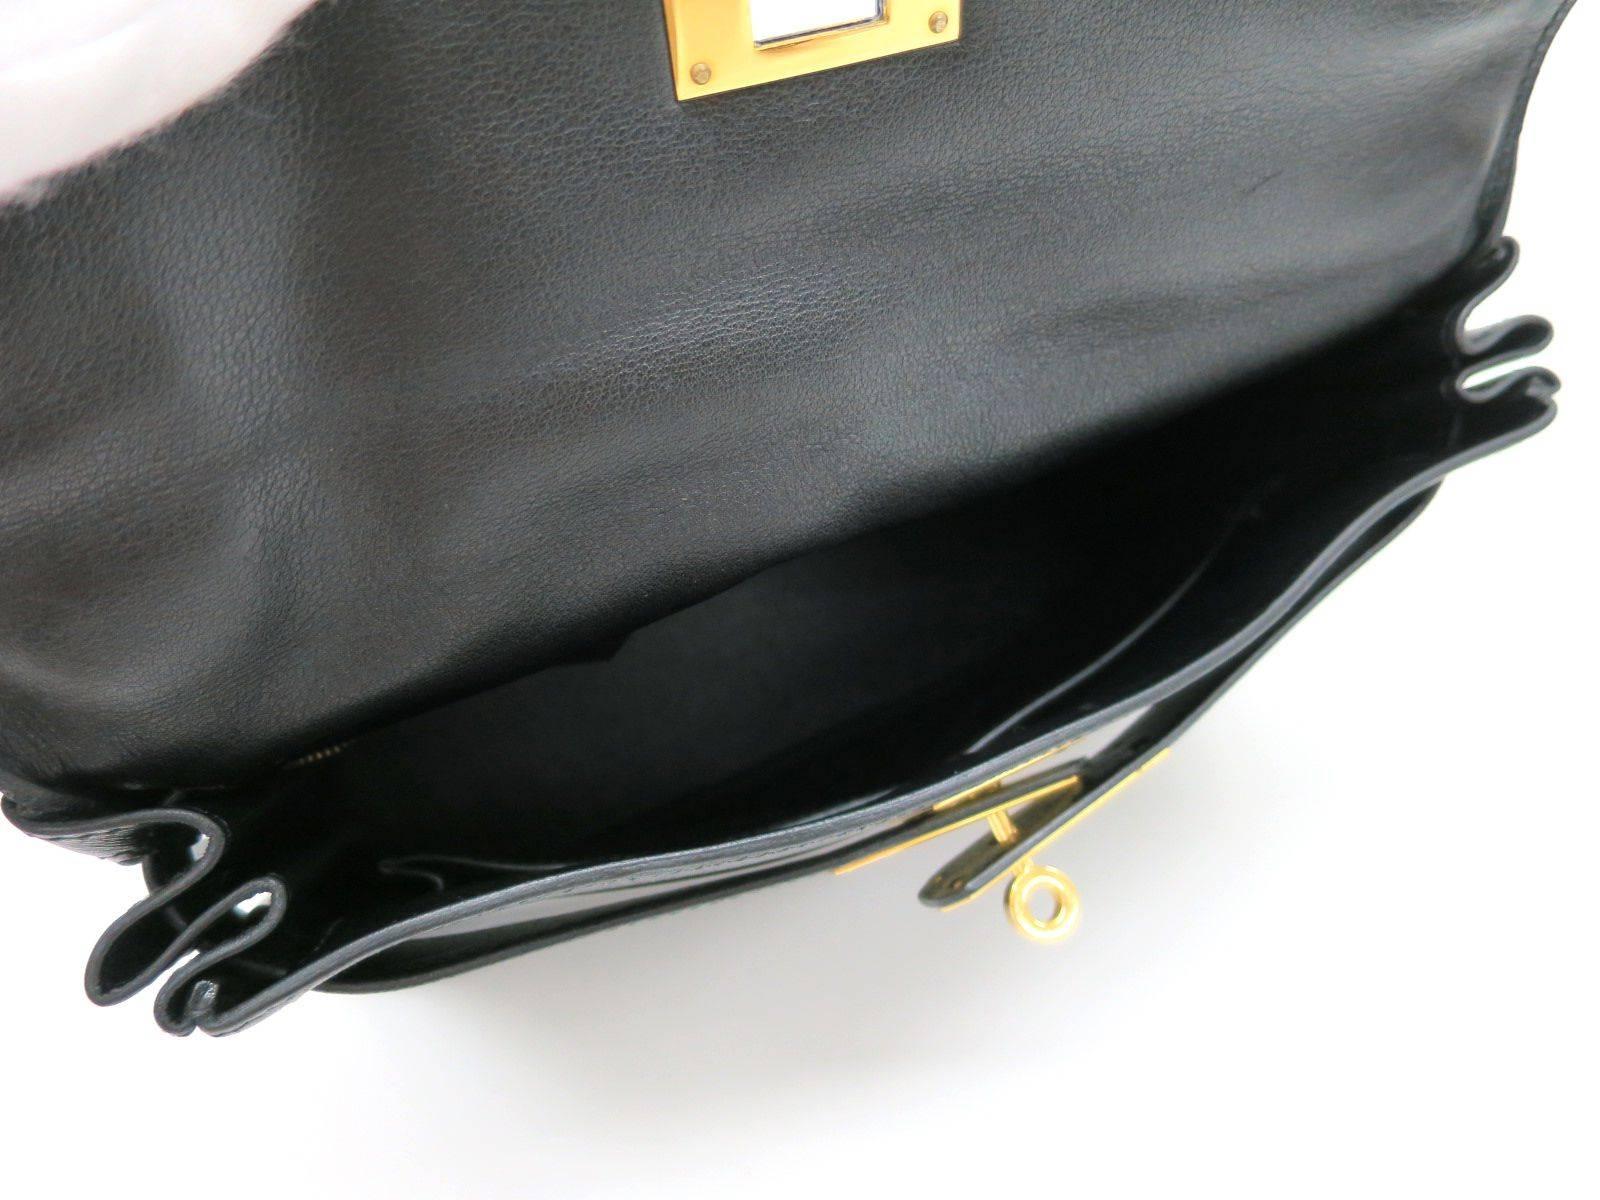 Hermes Black Kelly 28 Top Handle Satchel Shoulder Bag with Accessories in Box 2